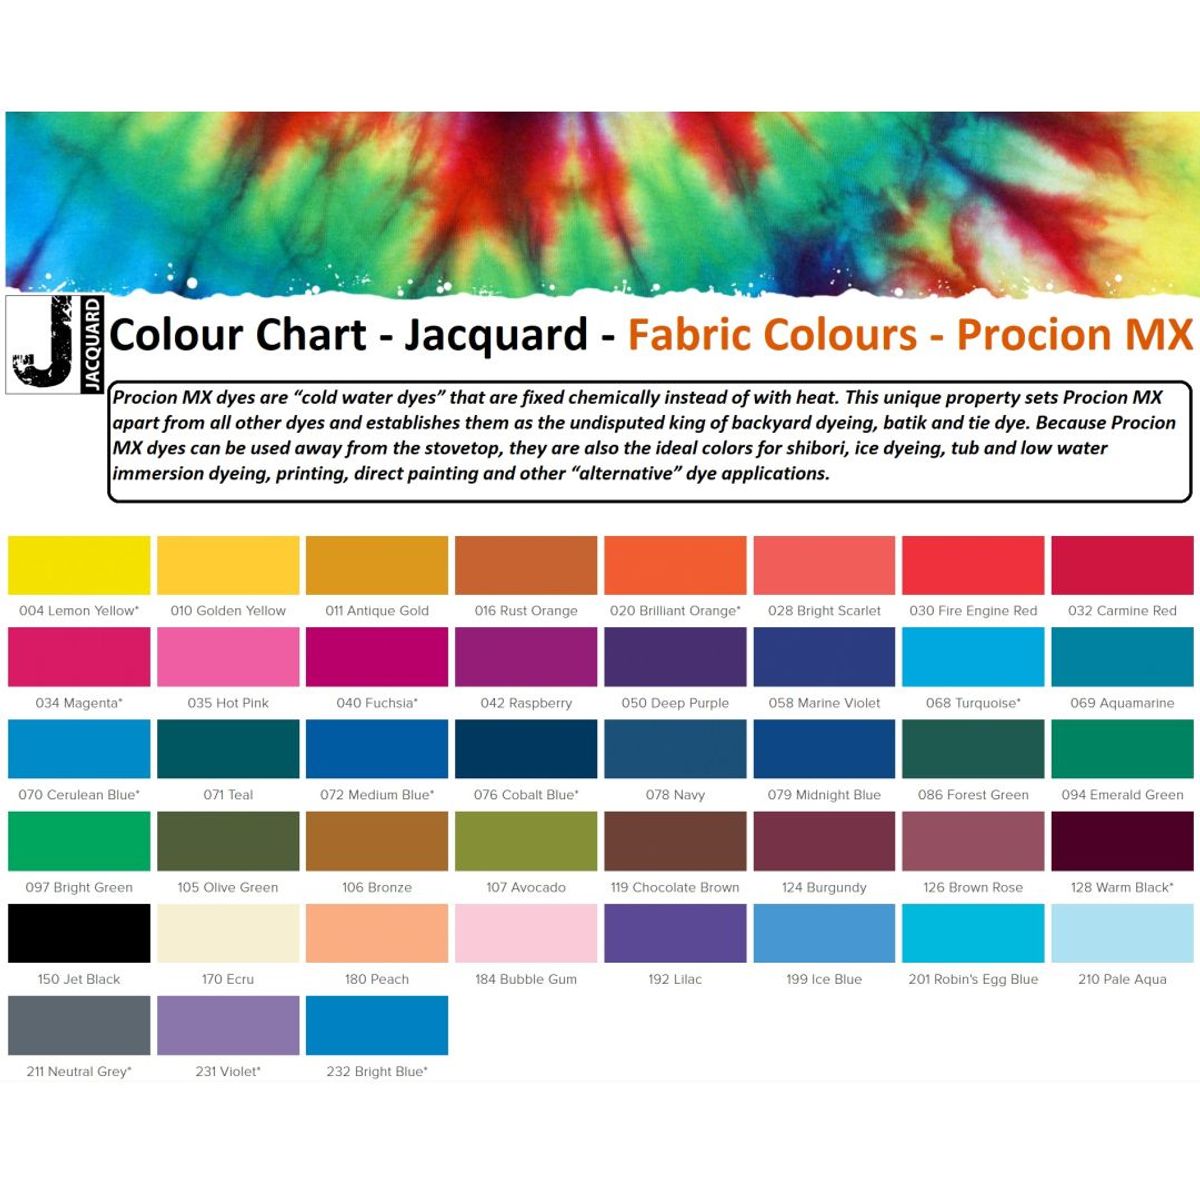 Jacquard - Procion MX Dye - Fabric Textile - Hot Pink 035